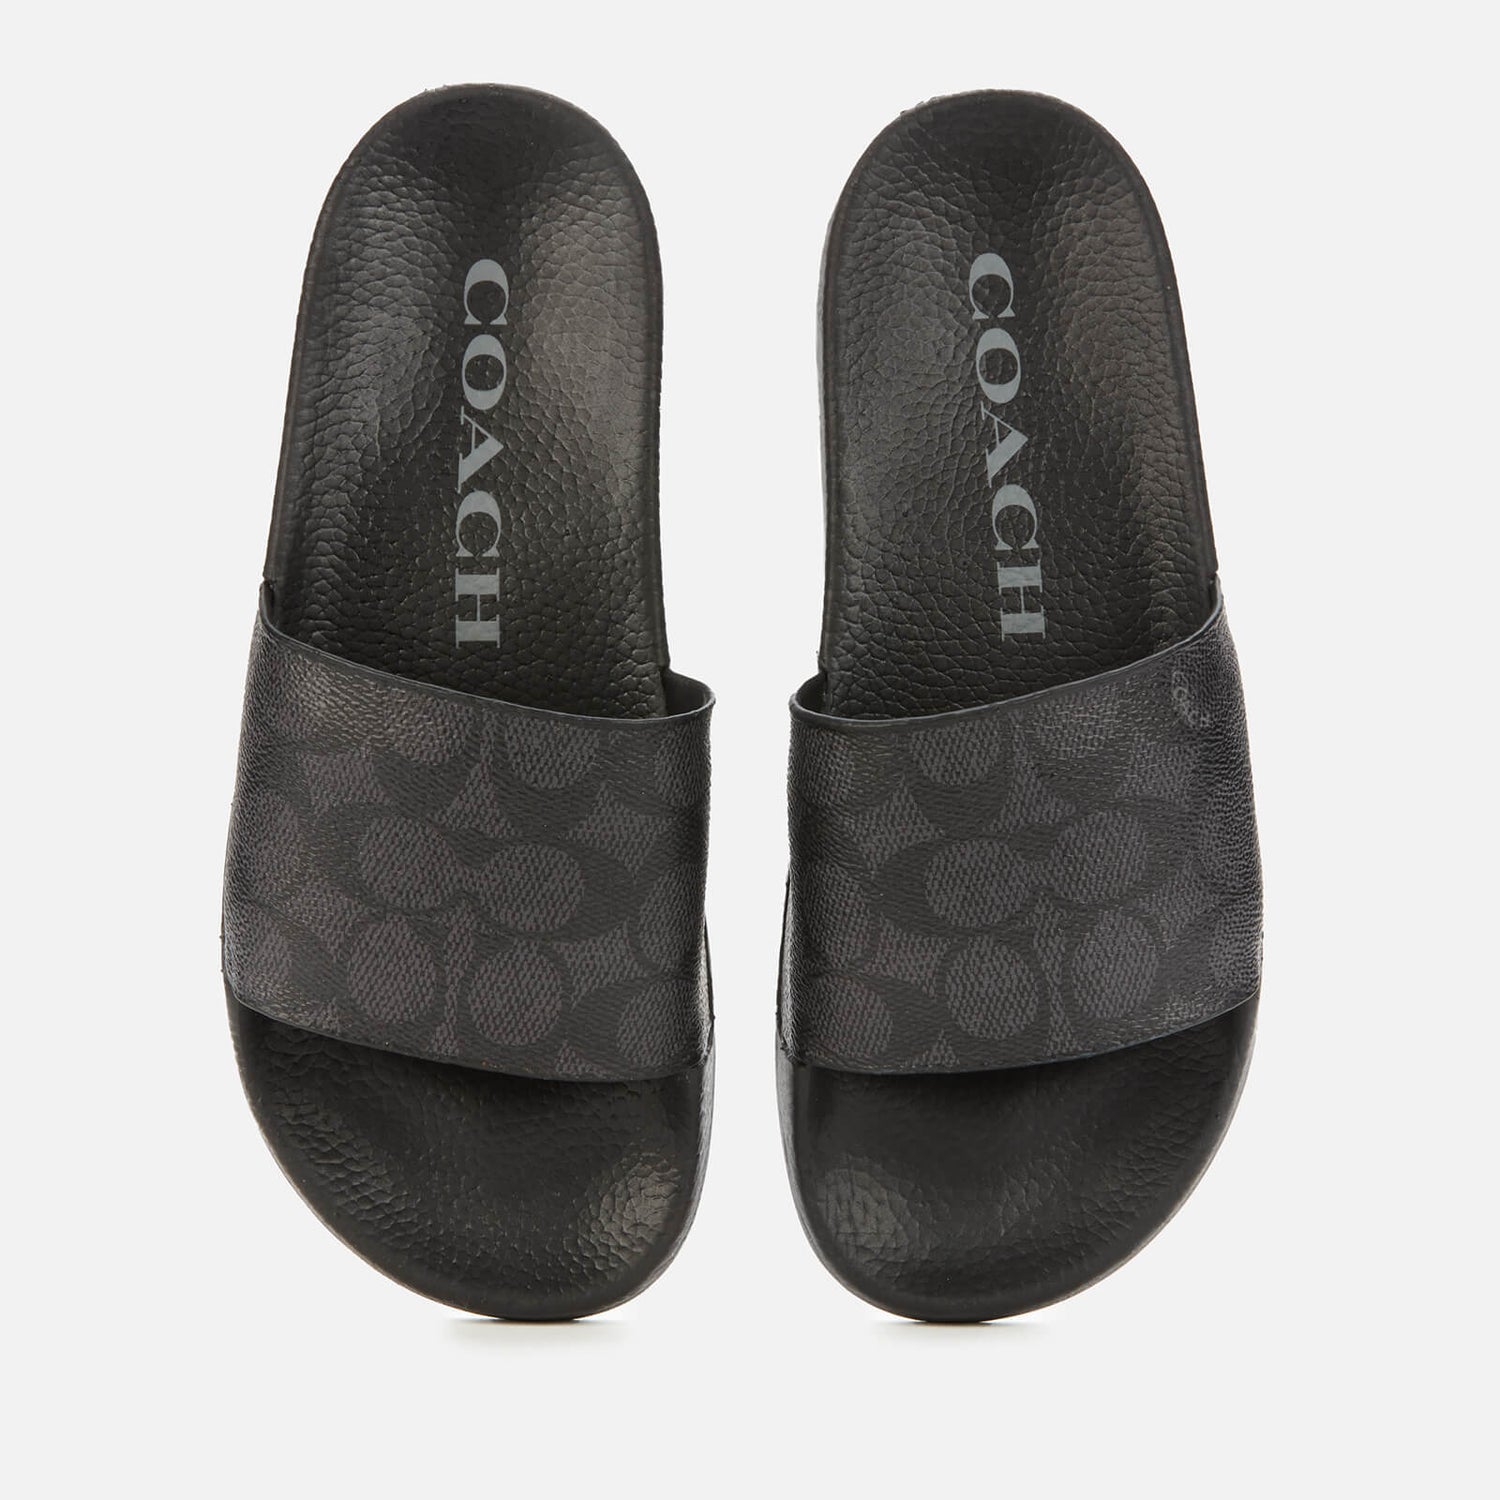 Coach Women's Udele Coated Canvas Slide Sandals - Charcoal/Black - UK 3